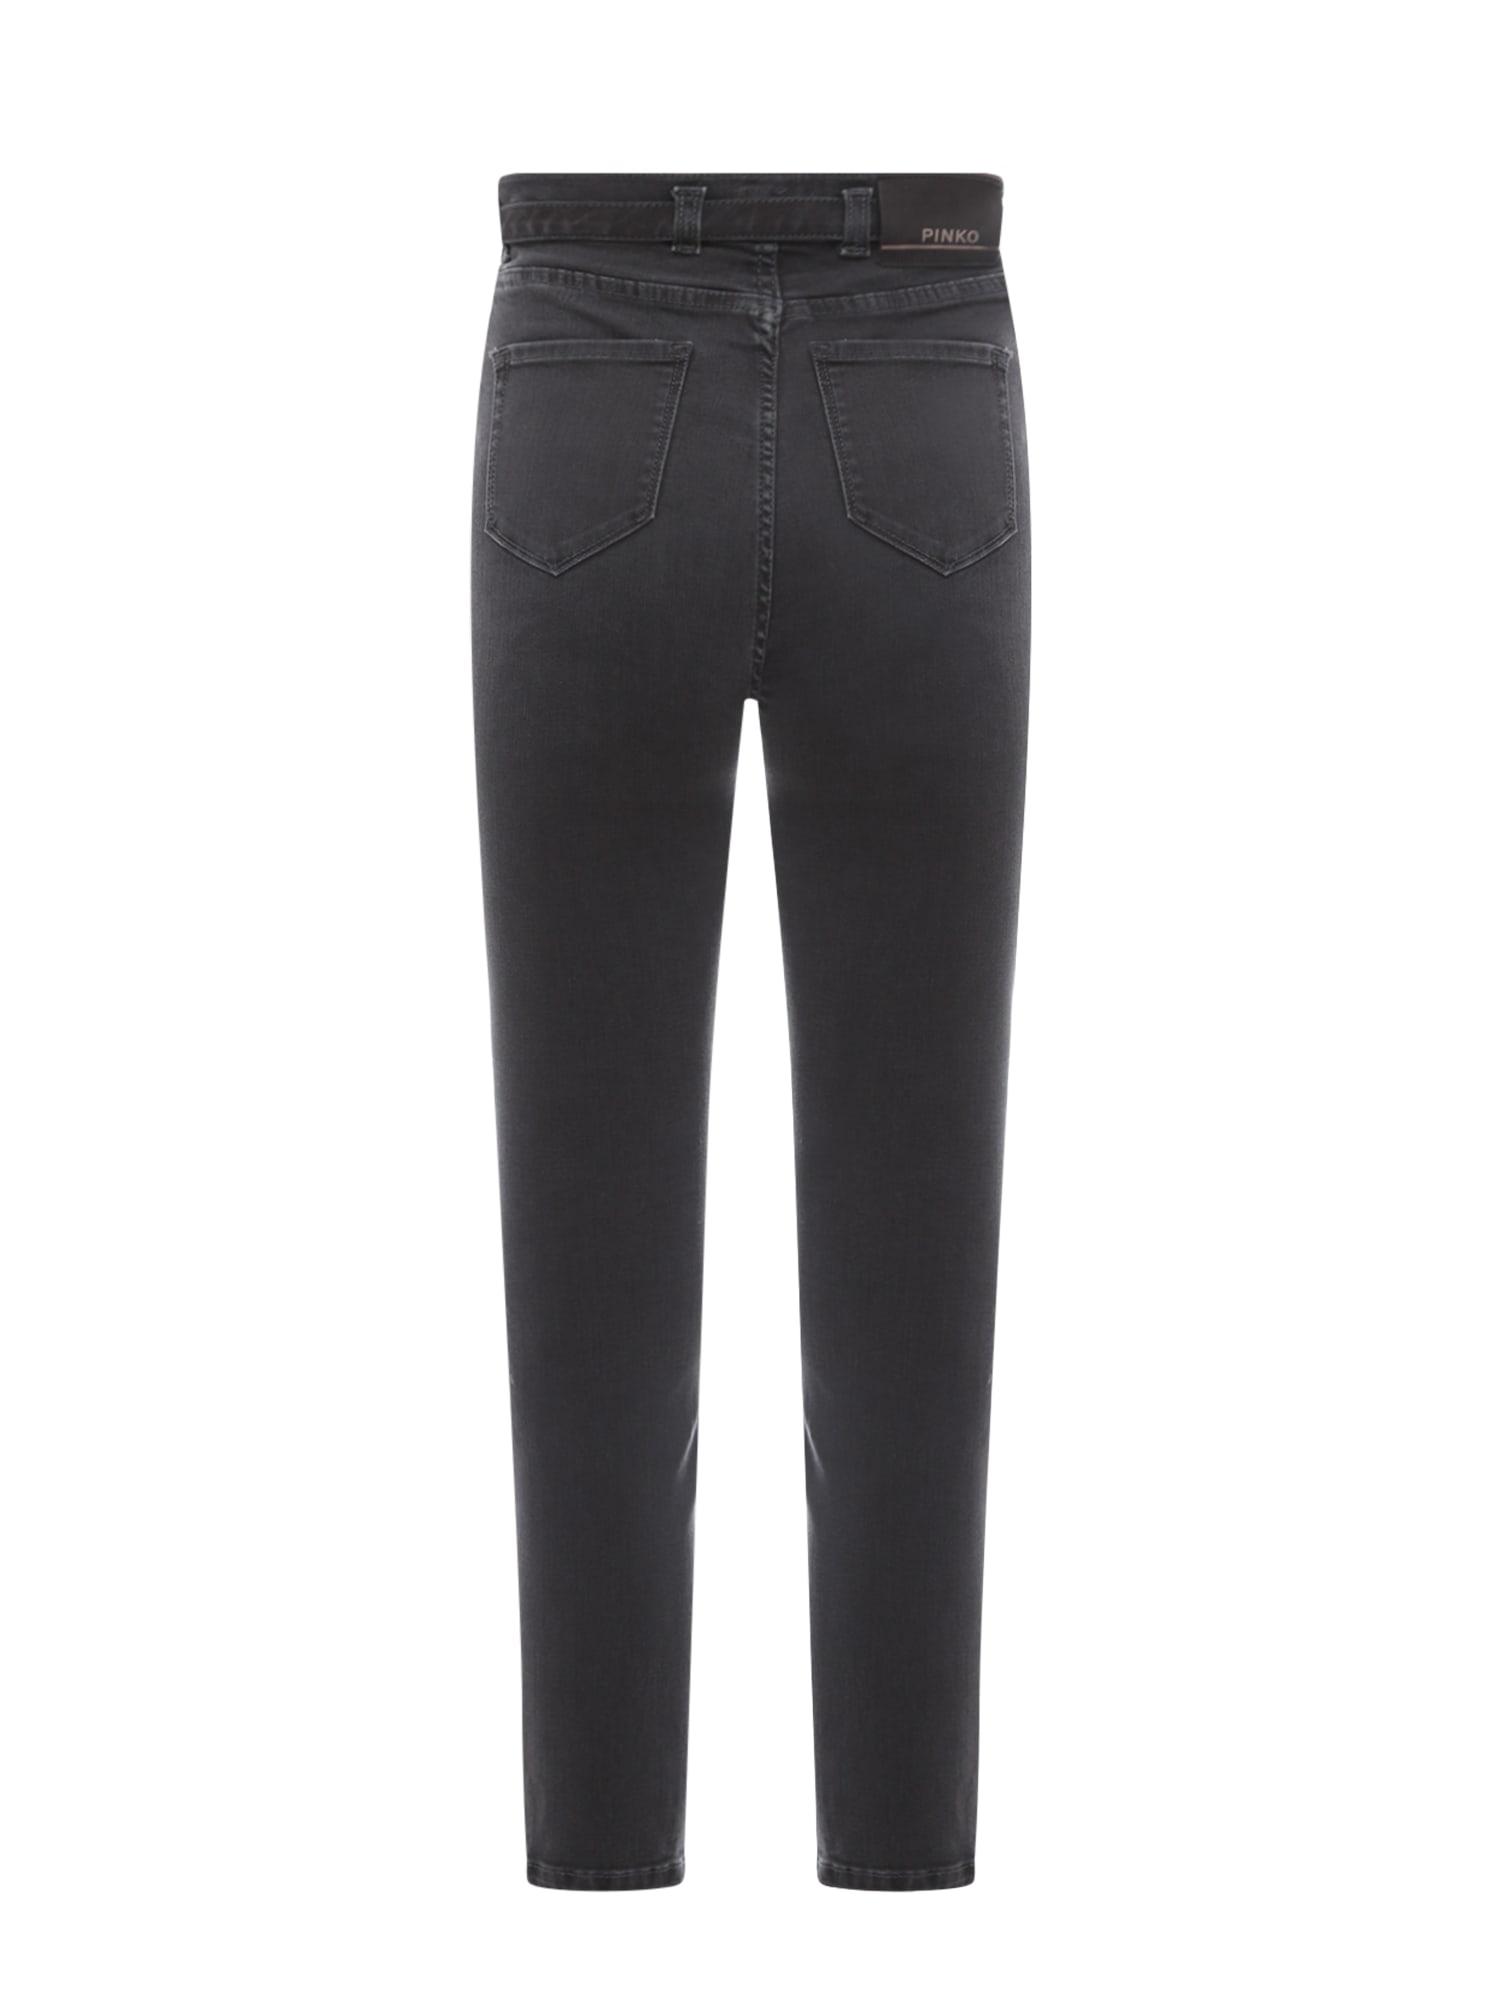 Pinko Denim Susan Jeans in Black (Blue) - Save 21% | Lyst